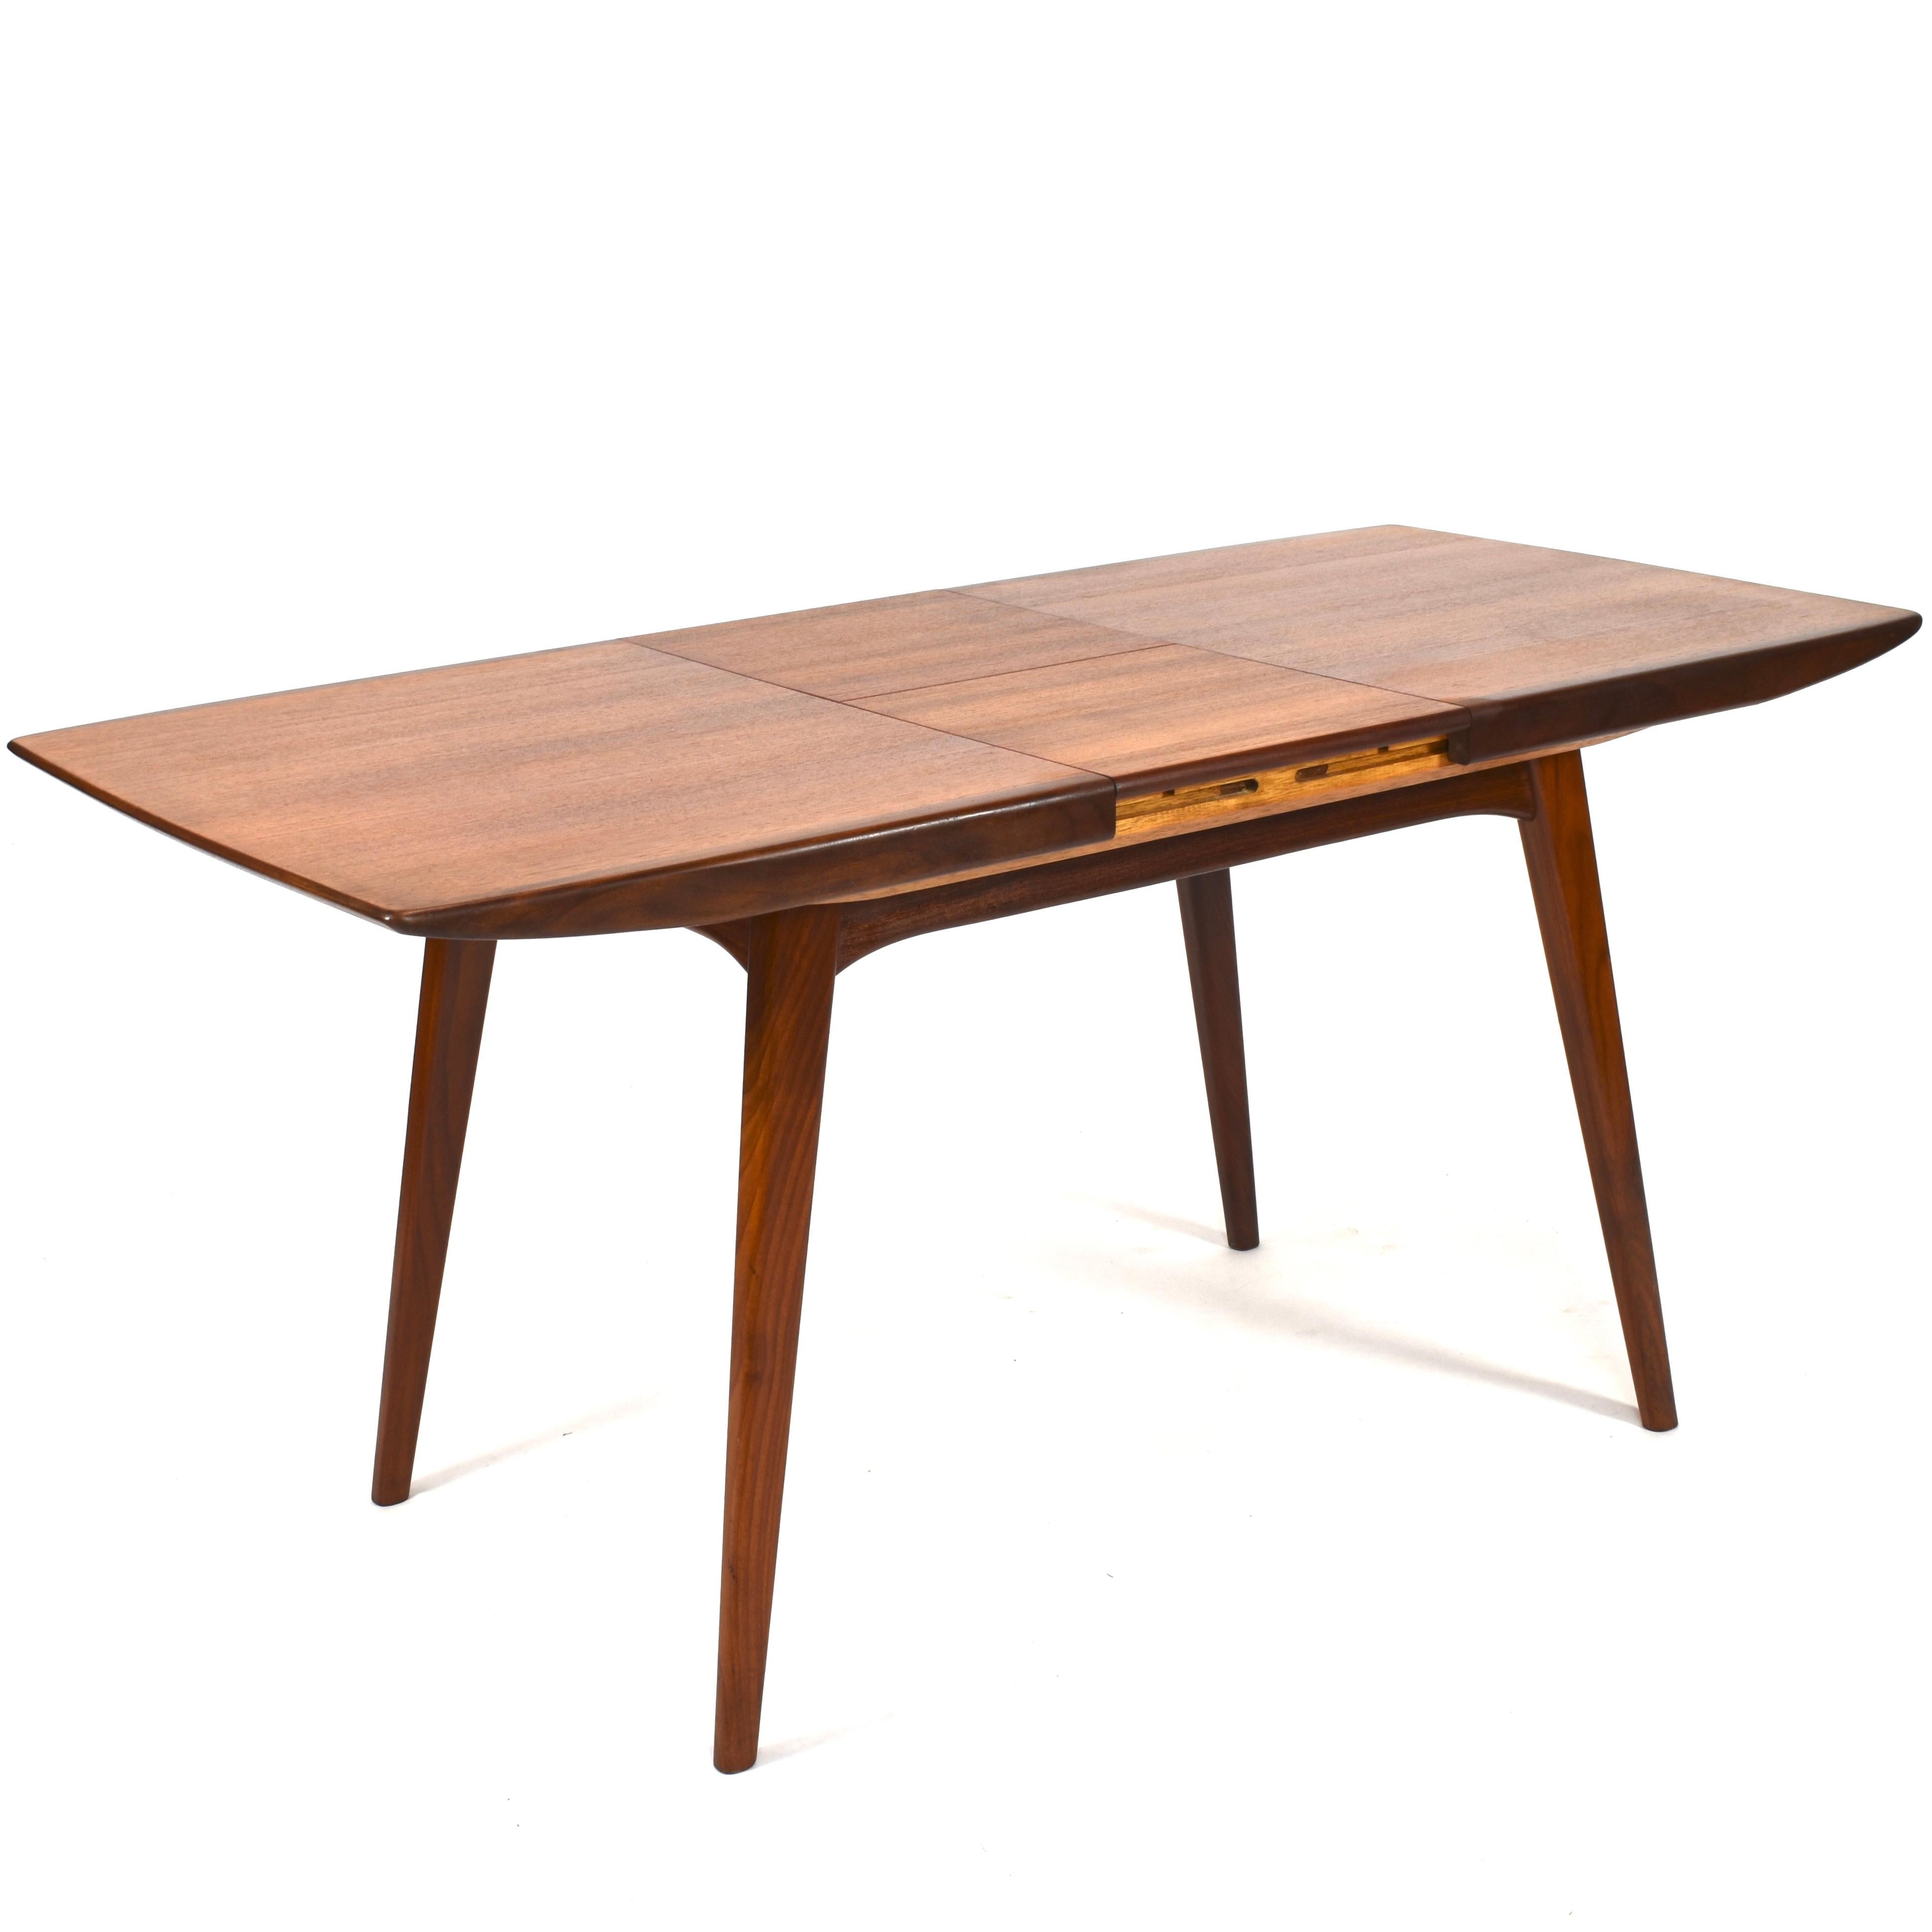 Fold-out dining table by Louis van Teeffelen for WeBe - The Netherlands, circa 1950.

Designer: Louis Van Teeffelen.

Manufacturer: WéBé, Walraven & Bevers.

Country: Netherlands.

Model: Extendable dining table.

Material: Teak (solid